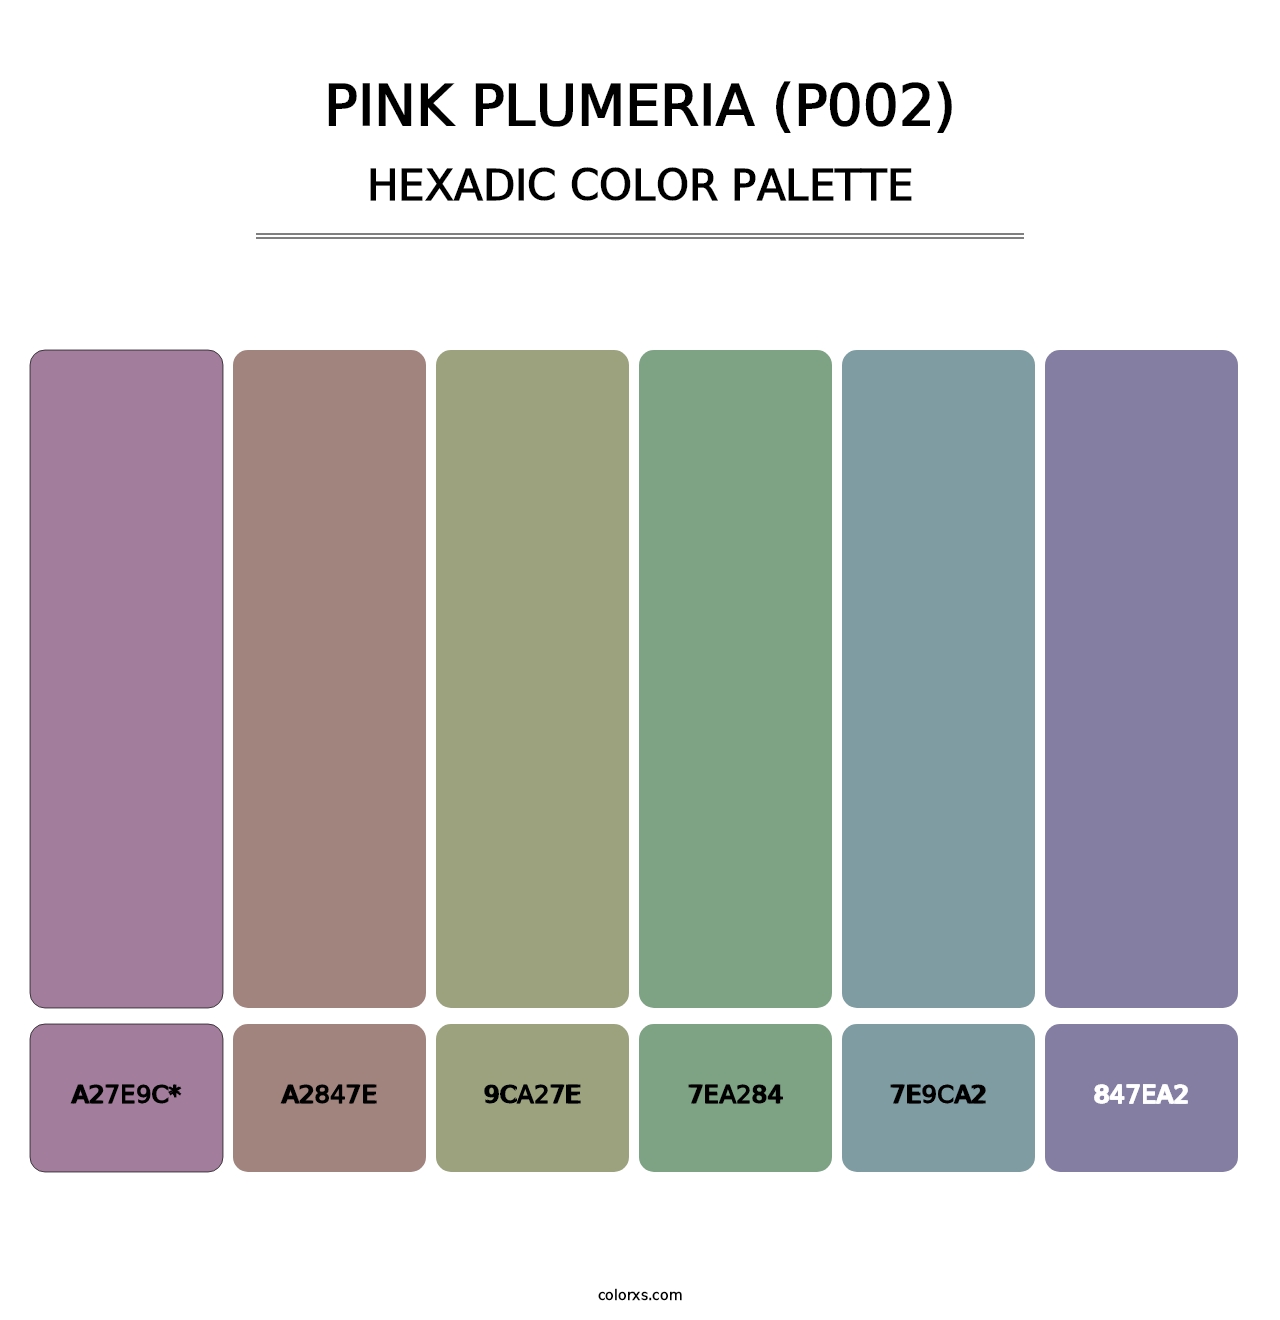 Pink Plumeria (P002) - Hexadic Color Palette